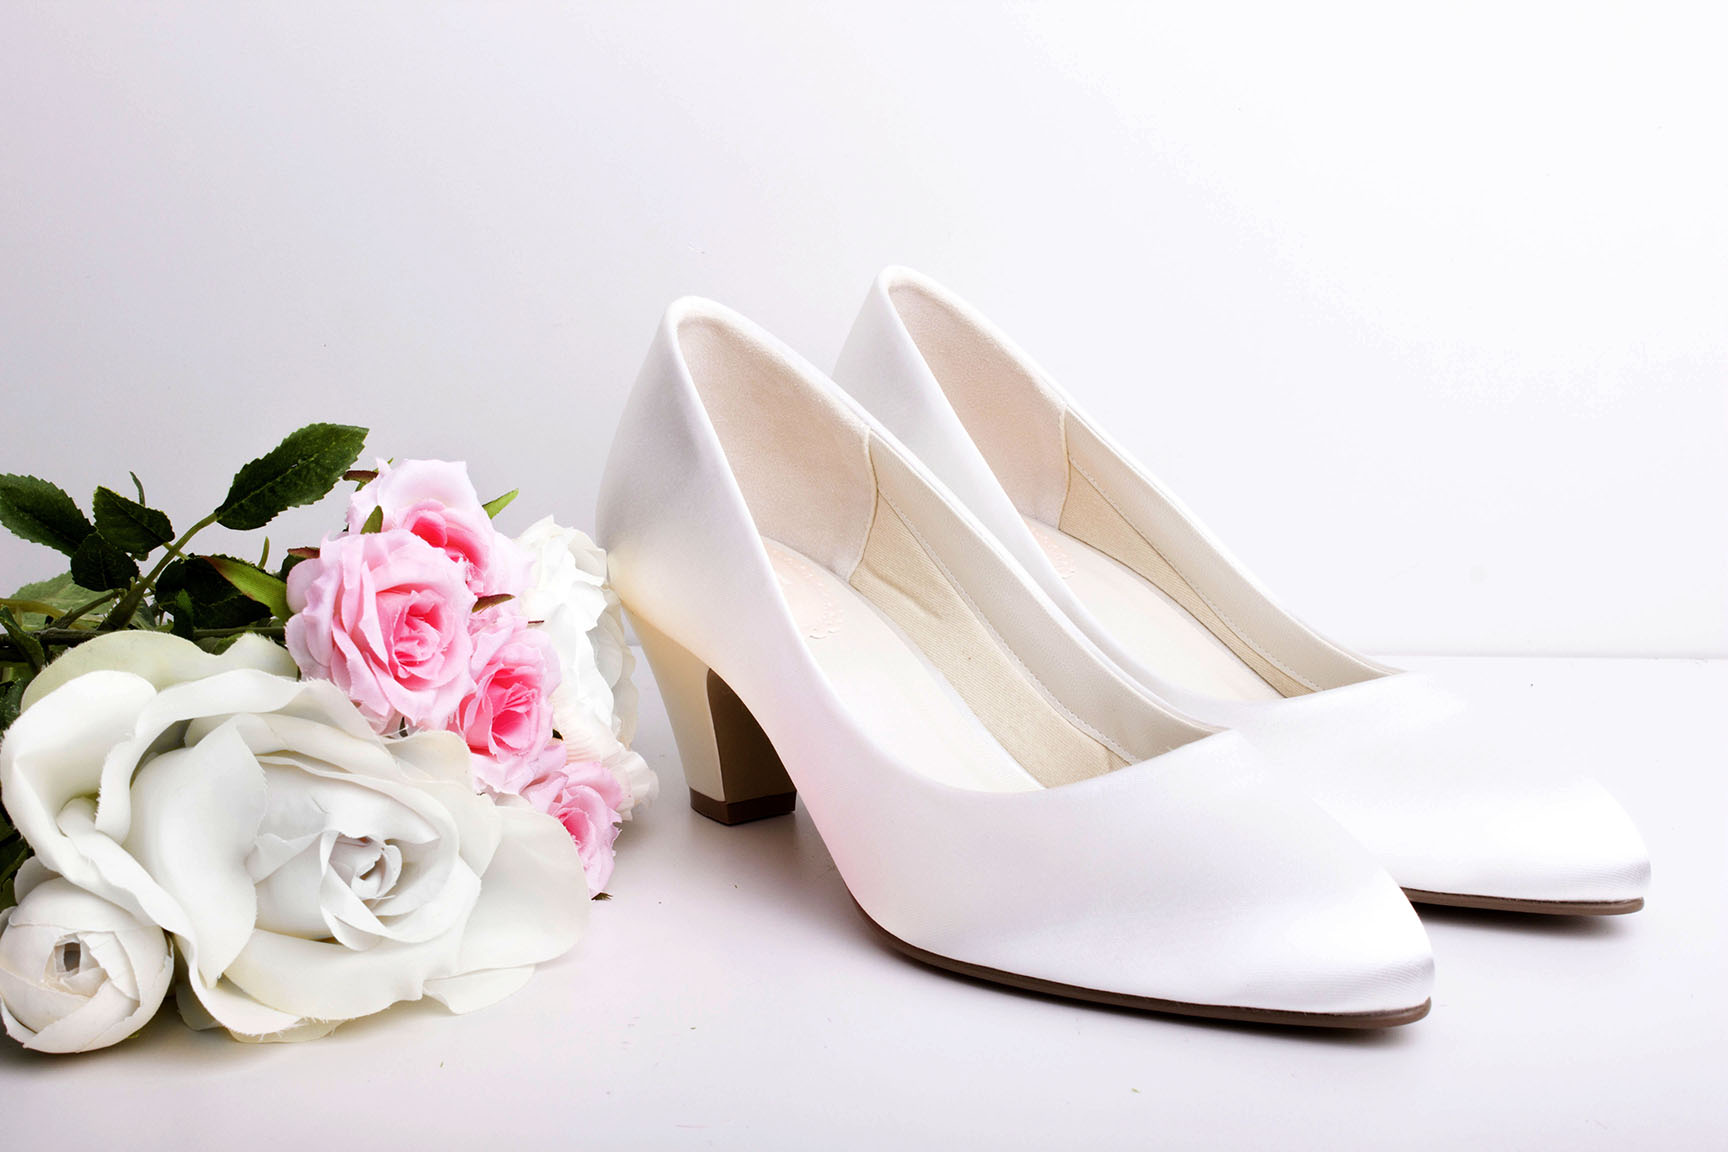 Wedding shoes, shoes, wedding accessories, pink paradox, weddings, wedding planner, top tips, wedding tips, wedding advice, shoe shopping, white shoes, 